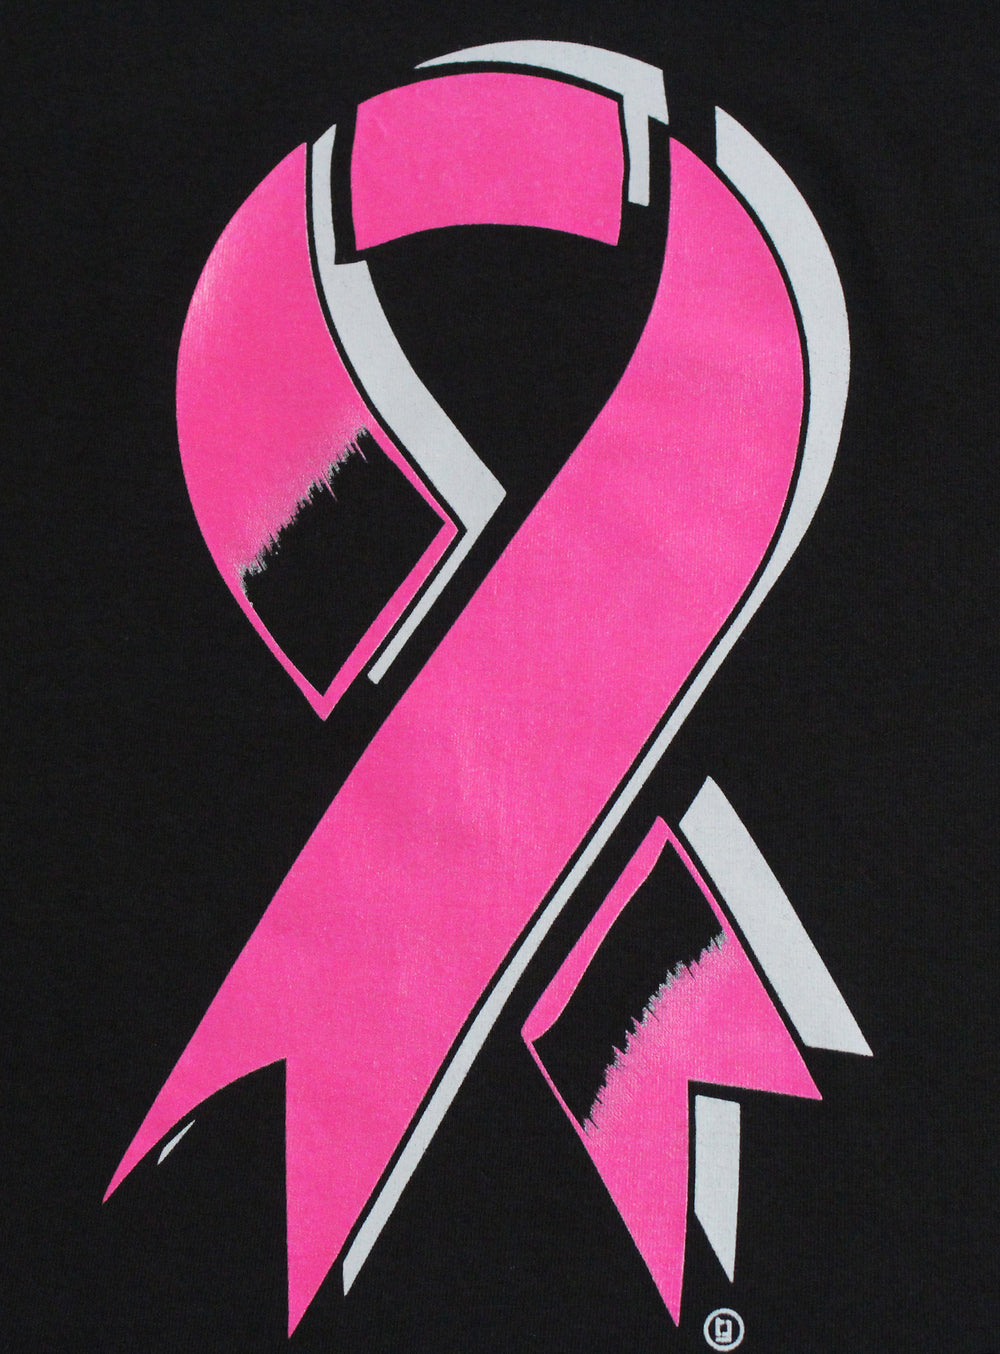 Pink Ribbon Breast Cancer Awareness